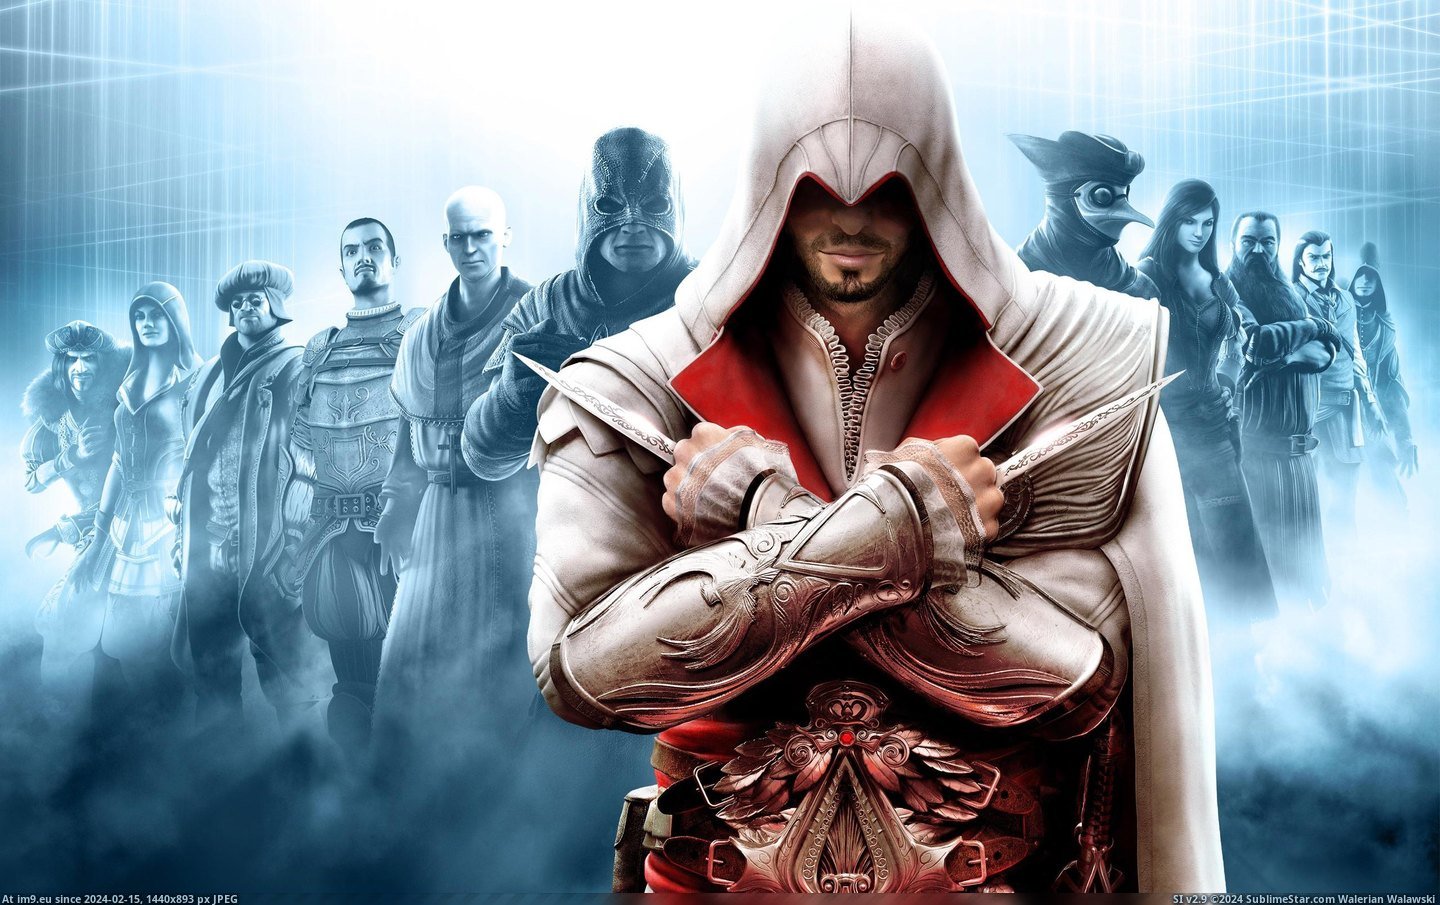 #Wallpaper #Wide #Brotherhood #Creed #Assassins Assassins Creed Brotherhood 3 Wide HD Wallpaper Pic. (Изображение из альбом Unique HD Wallpapers))